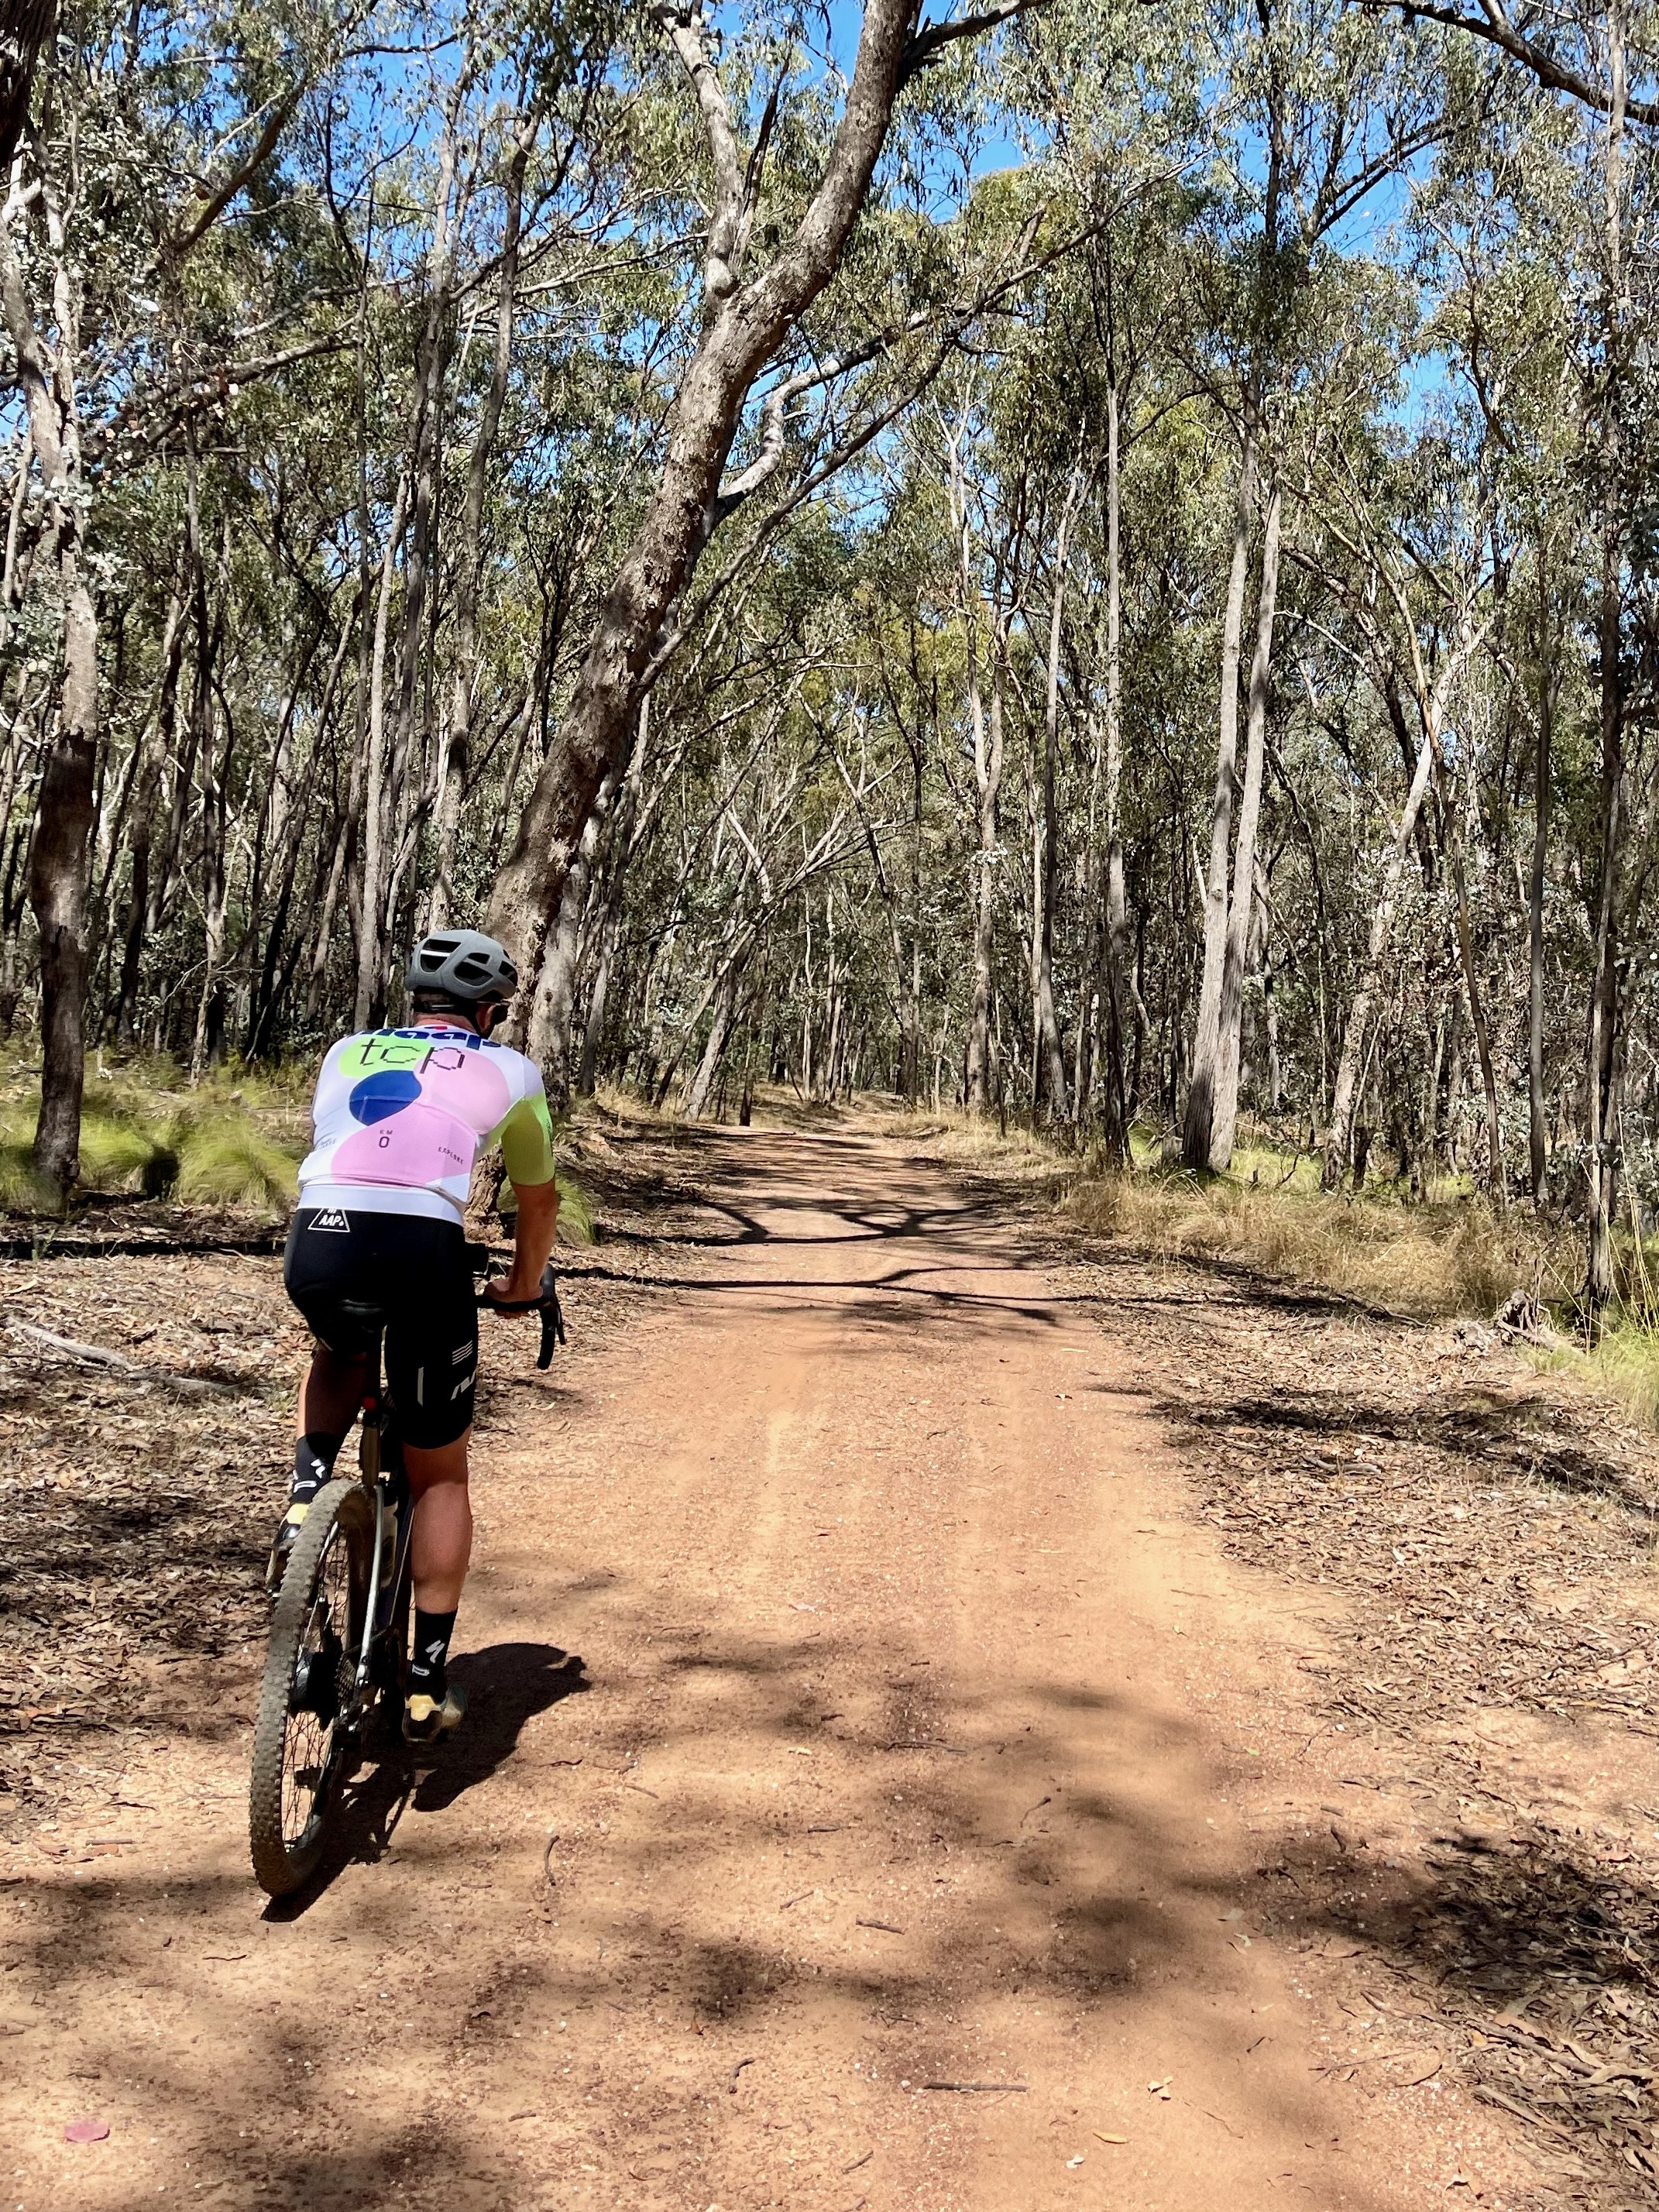 Cyclist riding a smooth dirt road through native bushland